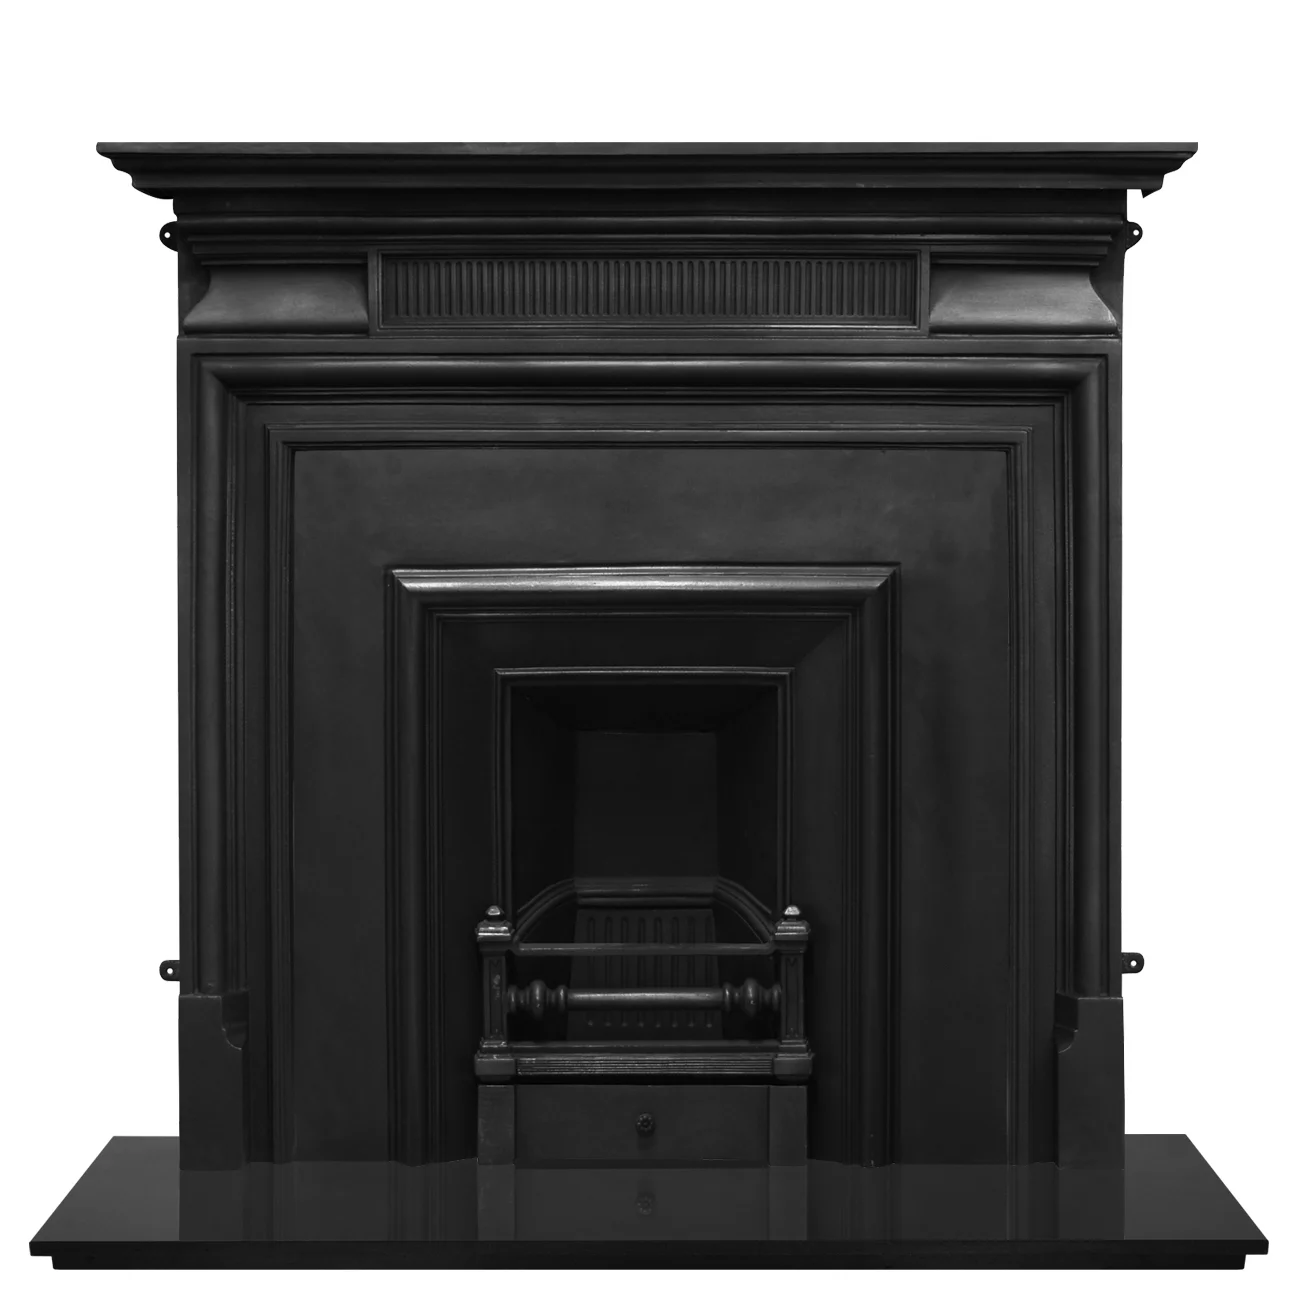 Royal-Narrow Cast iron Fireplace Insert